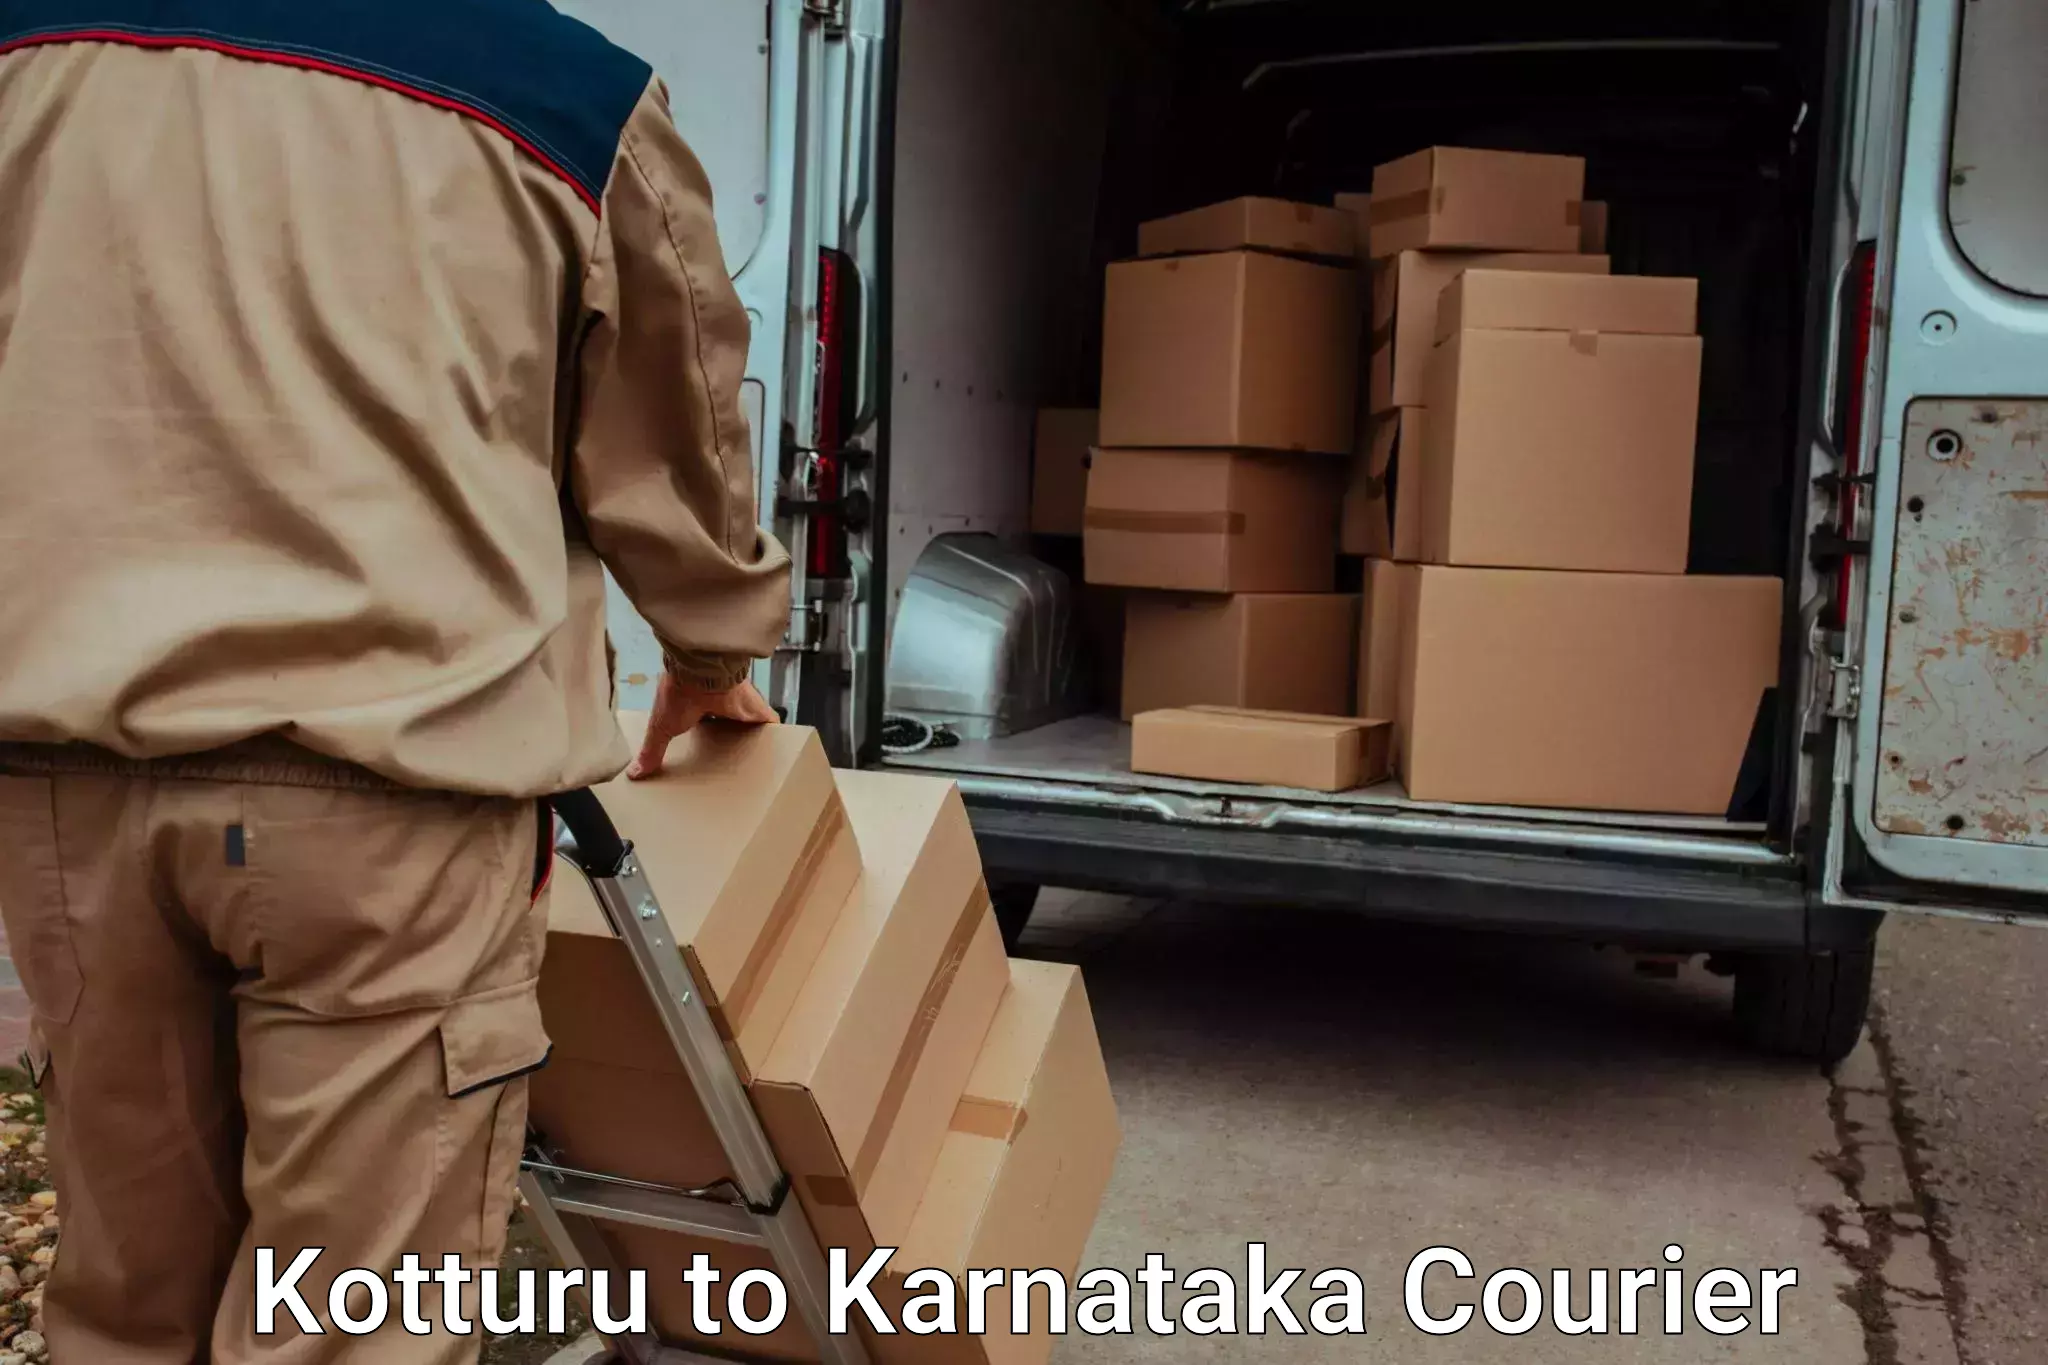 Budget-friendly movers Kotturu to Karnataka